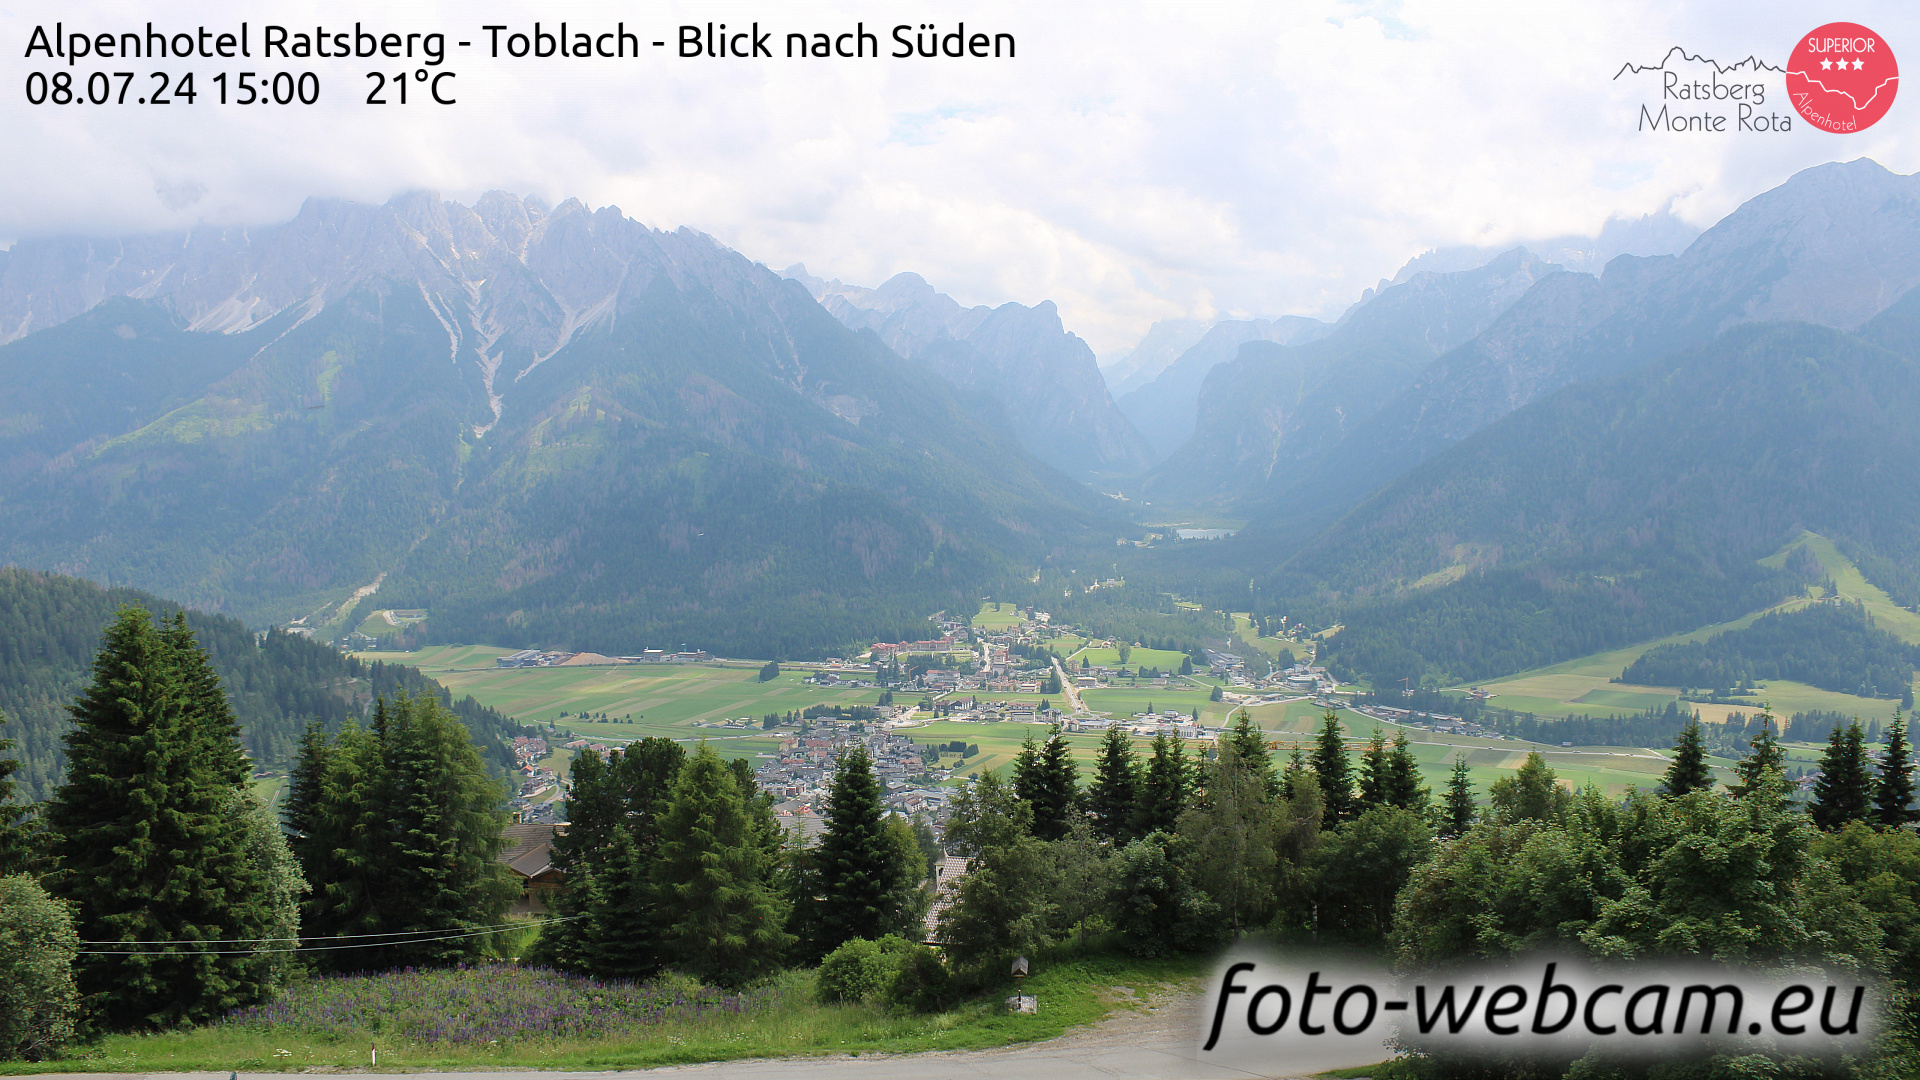 Toblach (Dolomites) Thu. 15:03